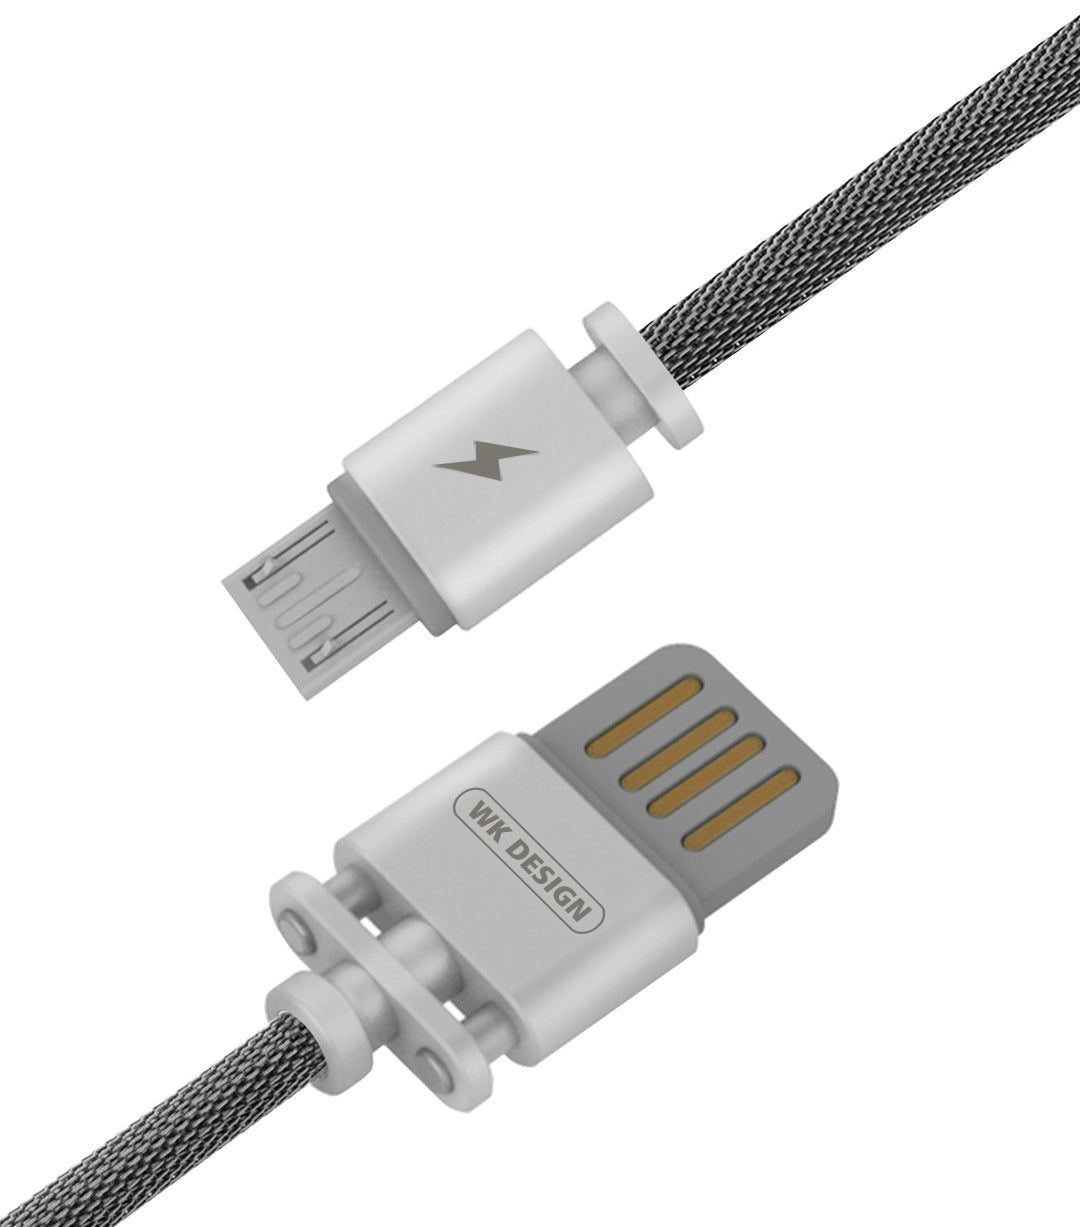 WK MASTER Cink Ötvözetű Fém Micro USB Adatkábel 1m